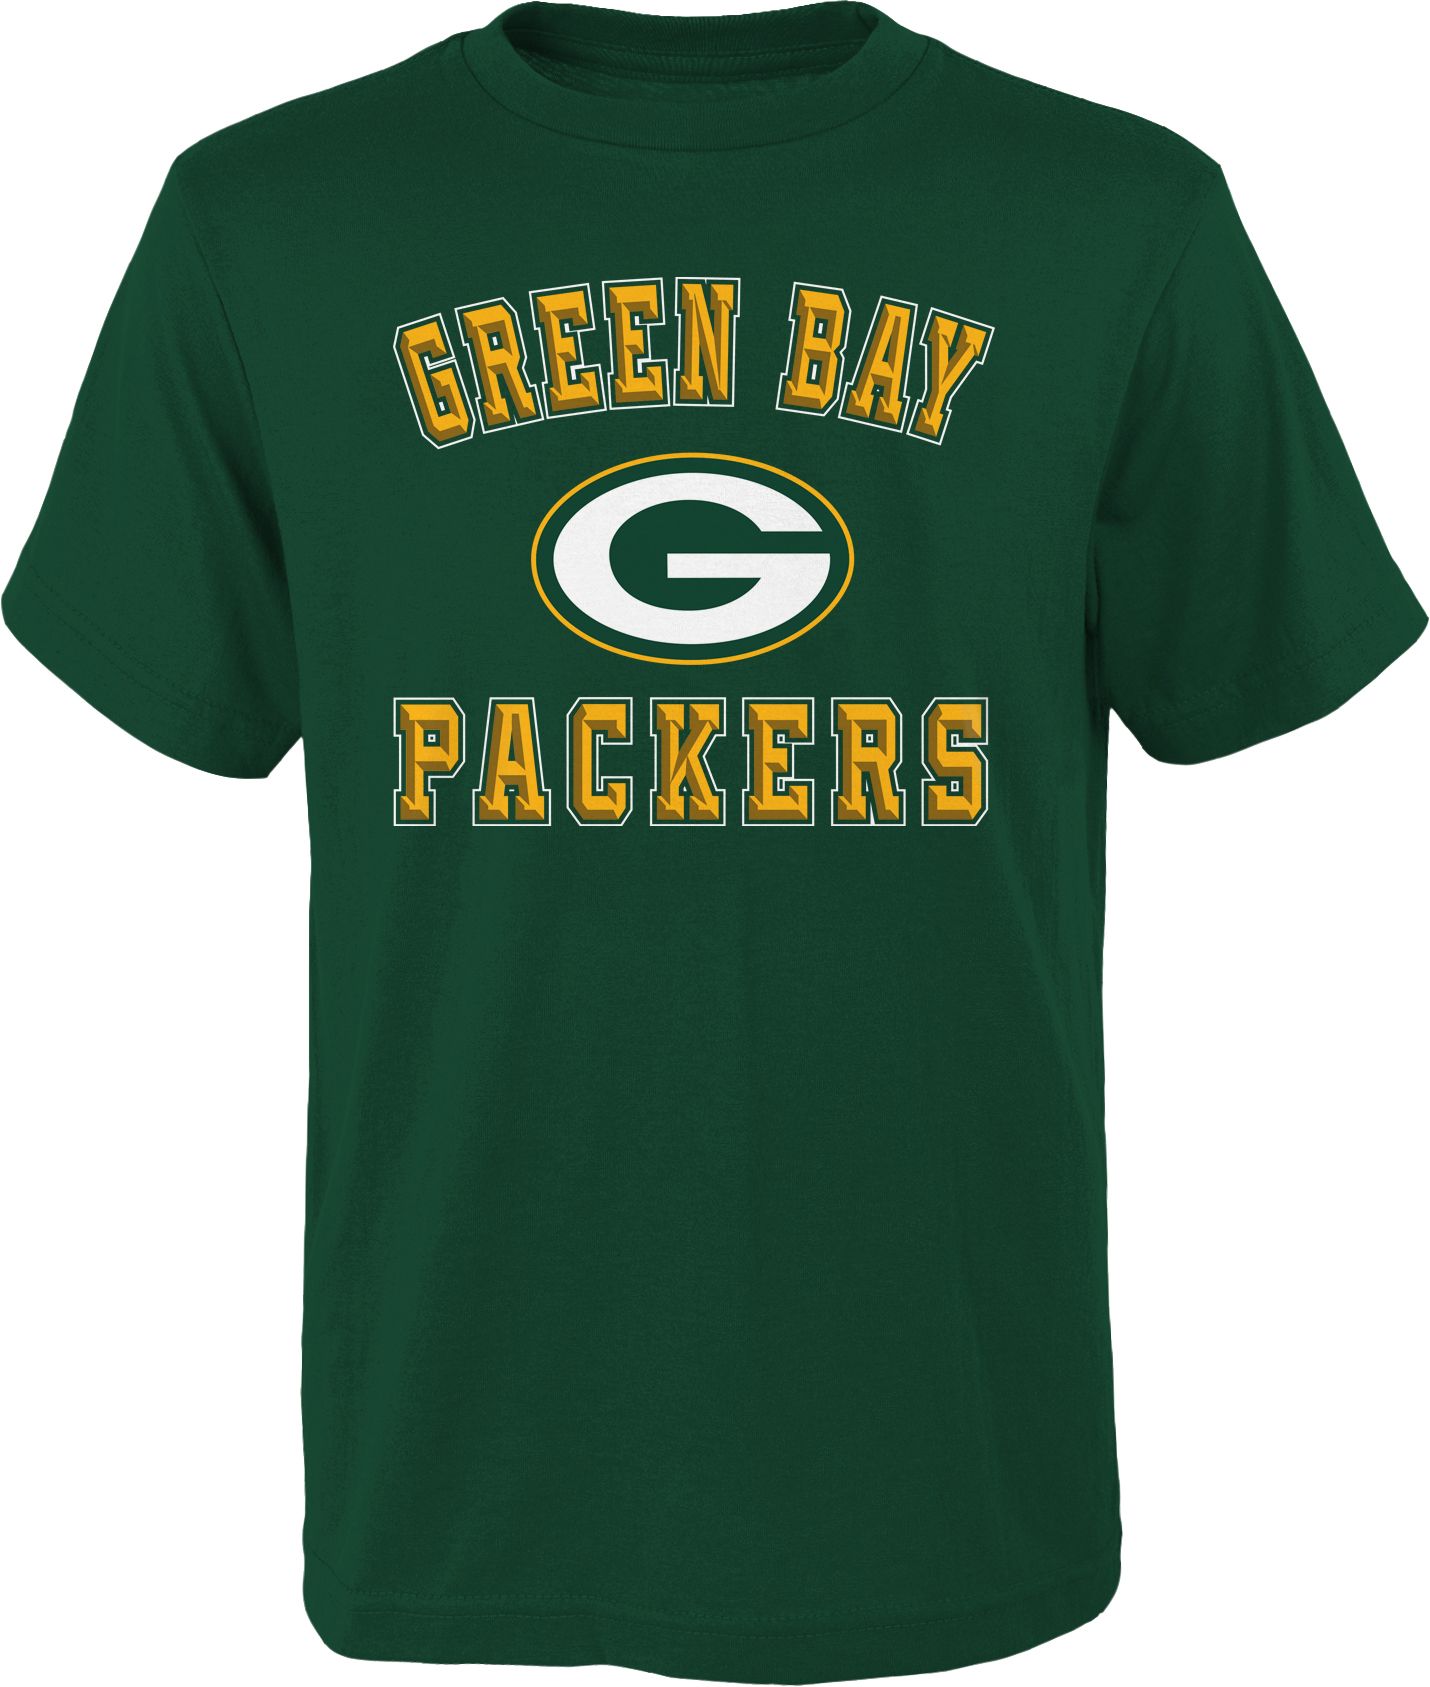 green bay packers shirt boys